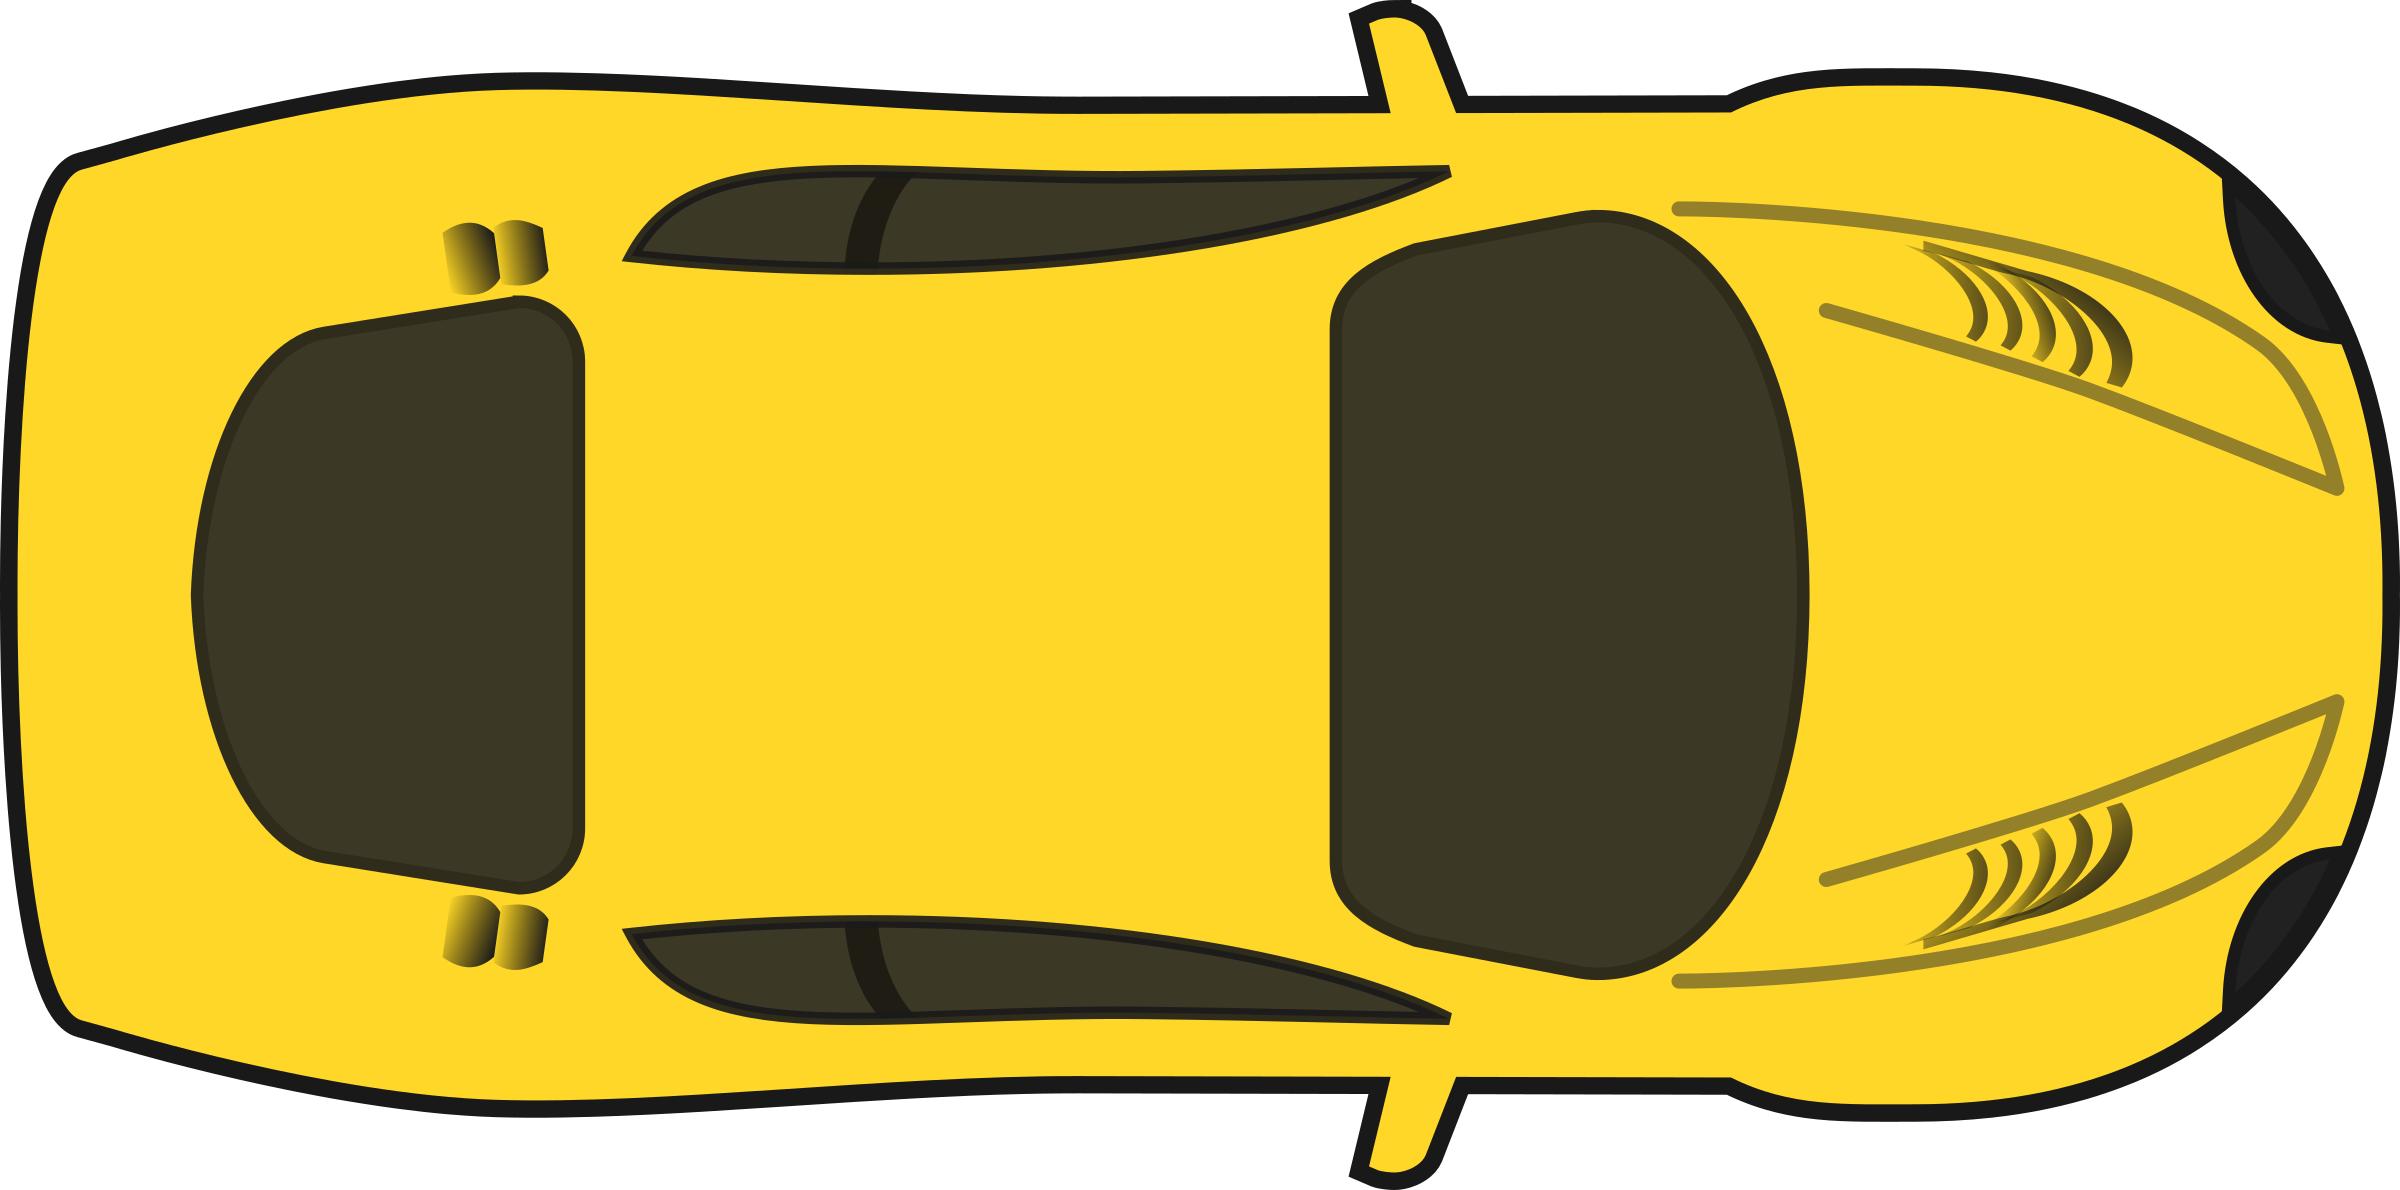 Yellow Racing Car (Top View) png